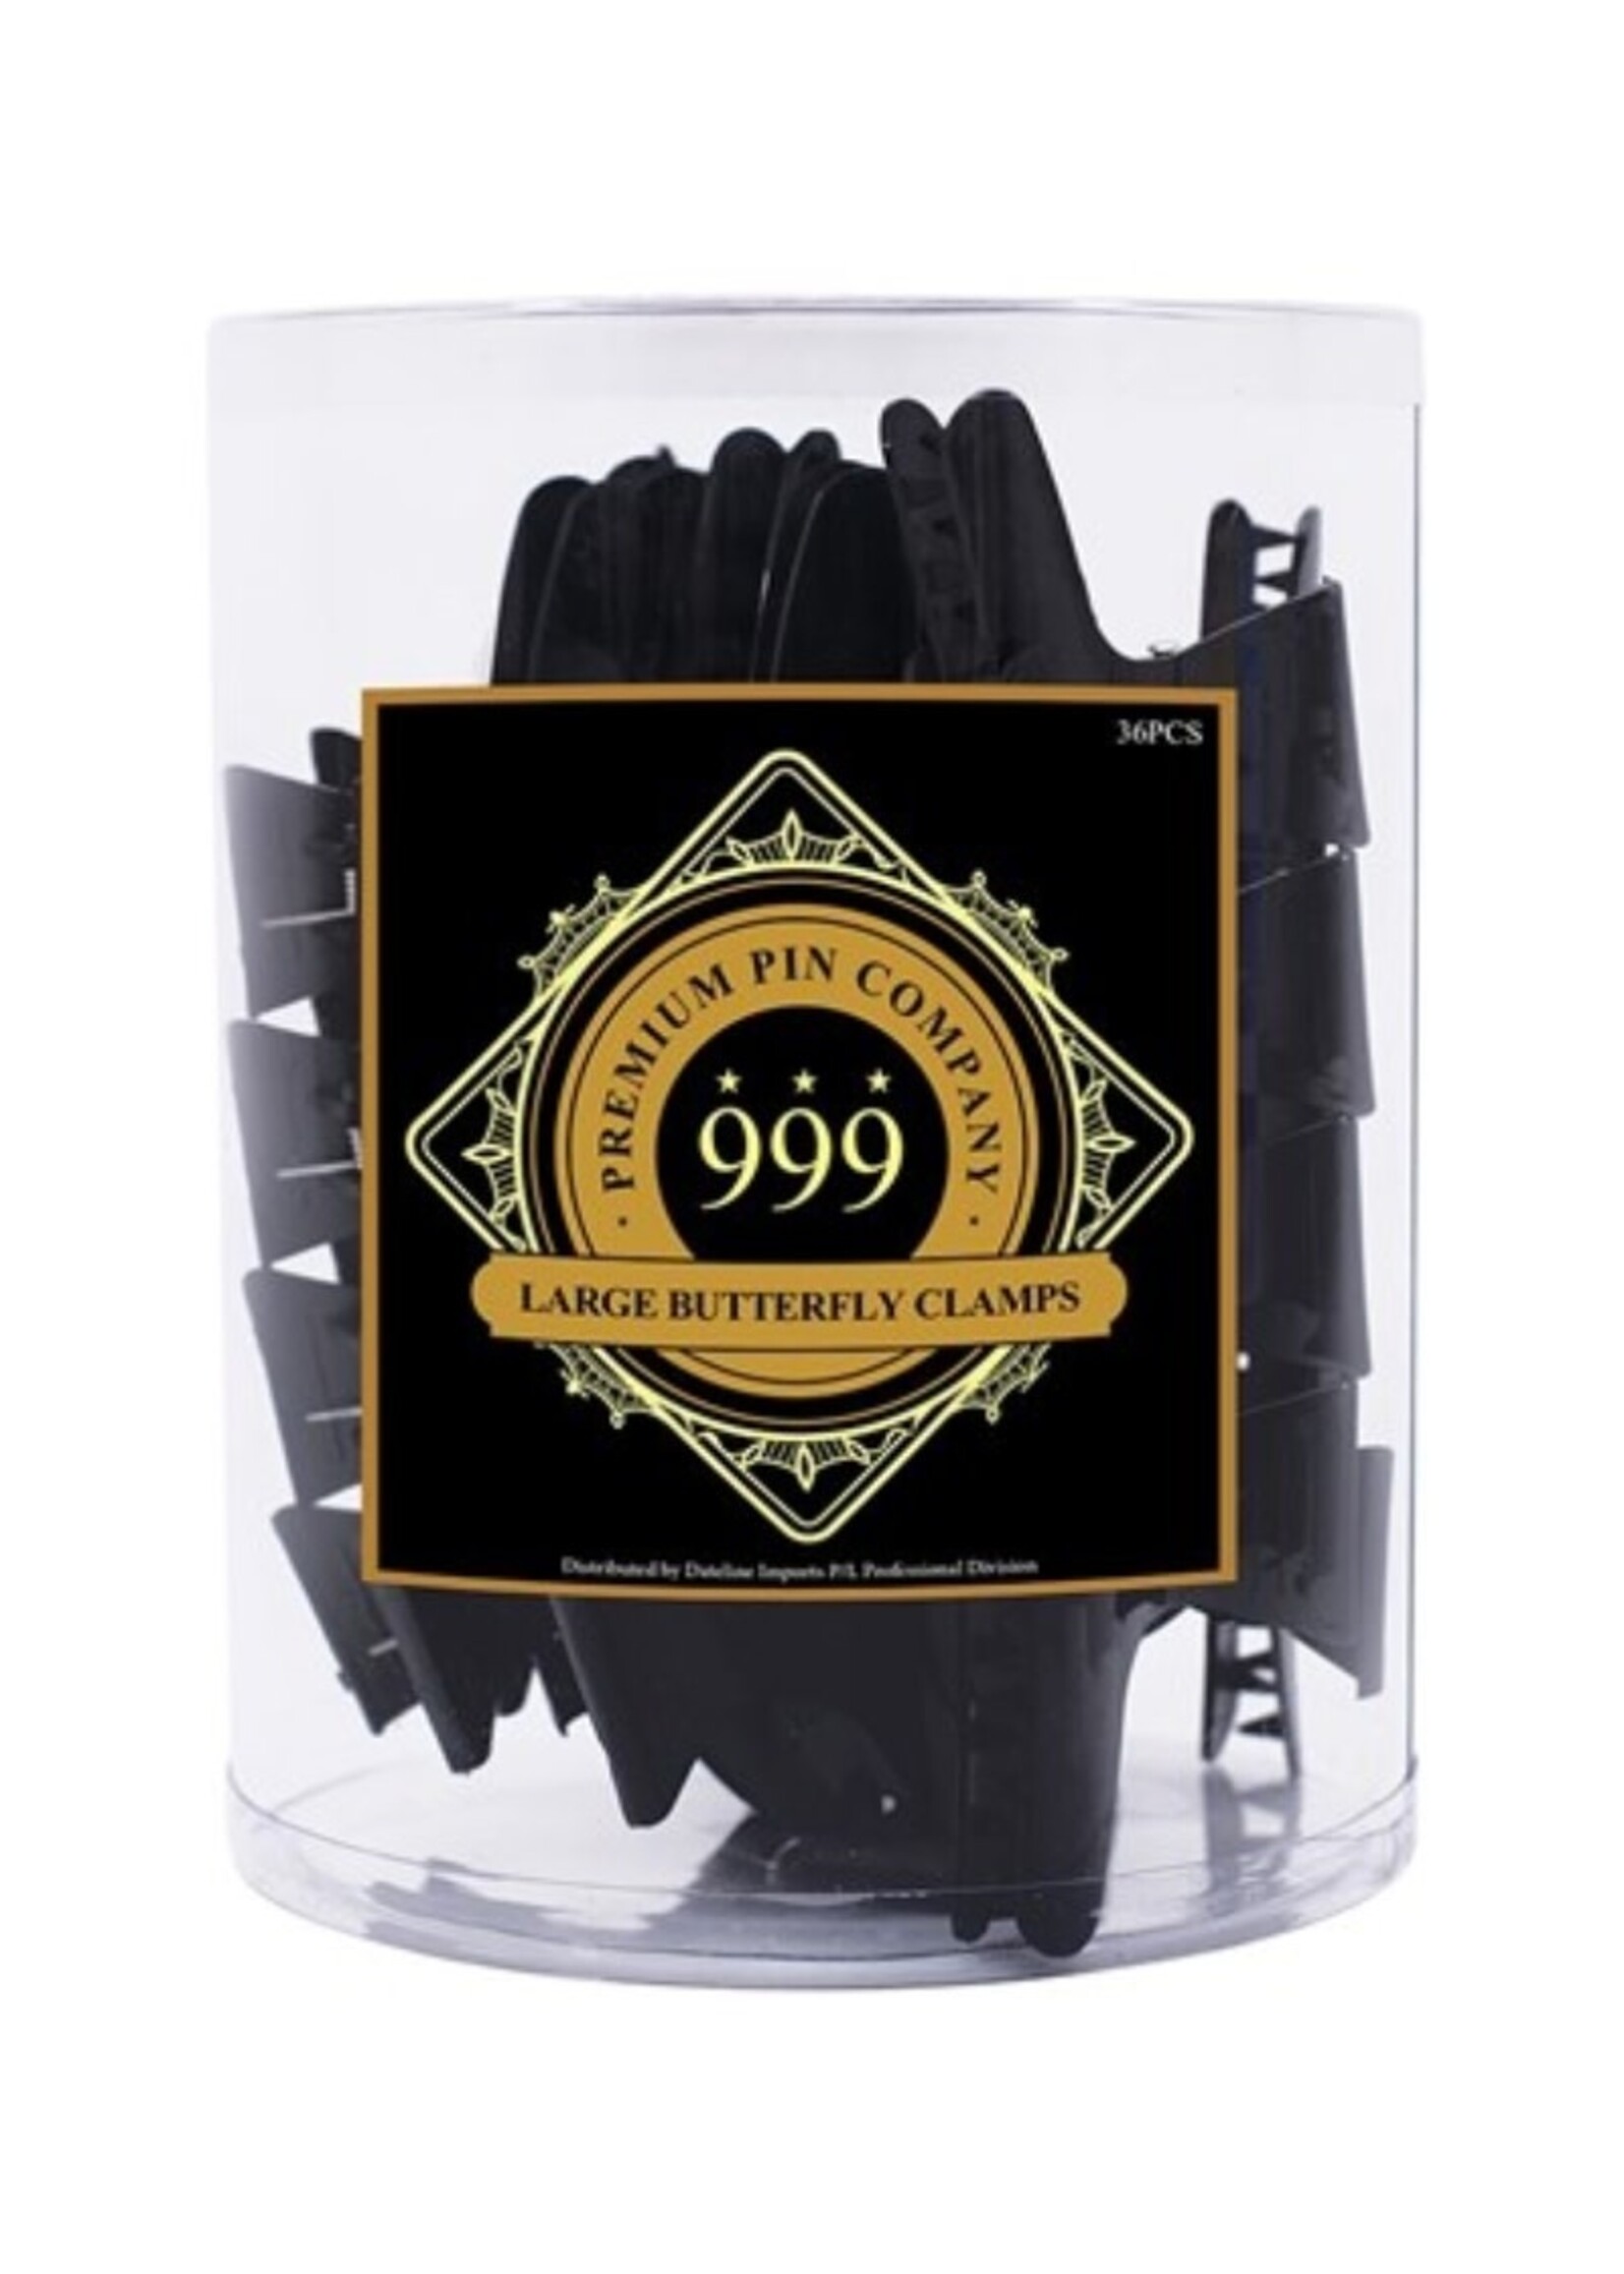 999 Premium Pin Company 999 Butterfly Clip Large Black Tub 36pcs